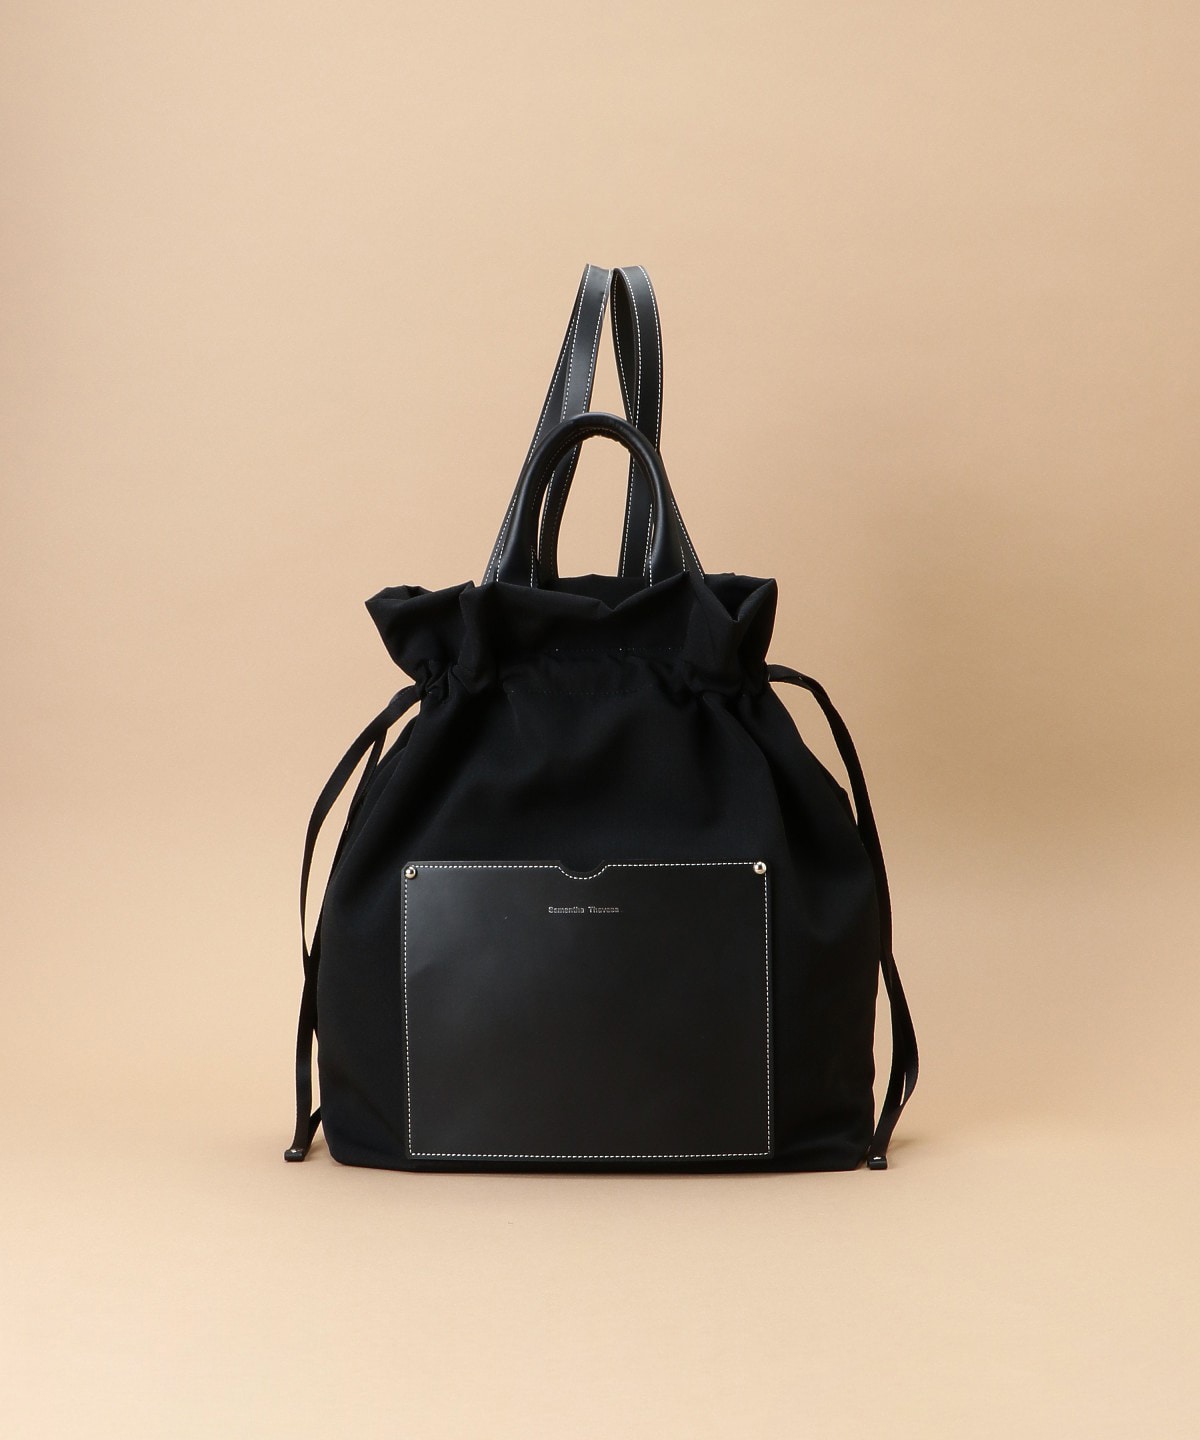 Dream bag for 巾着リュック(FREE ブラック): Samantha Thavasa 